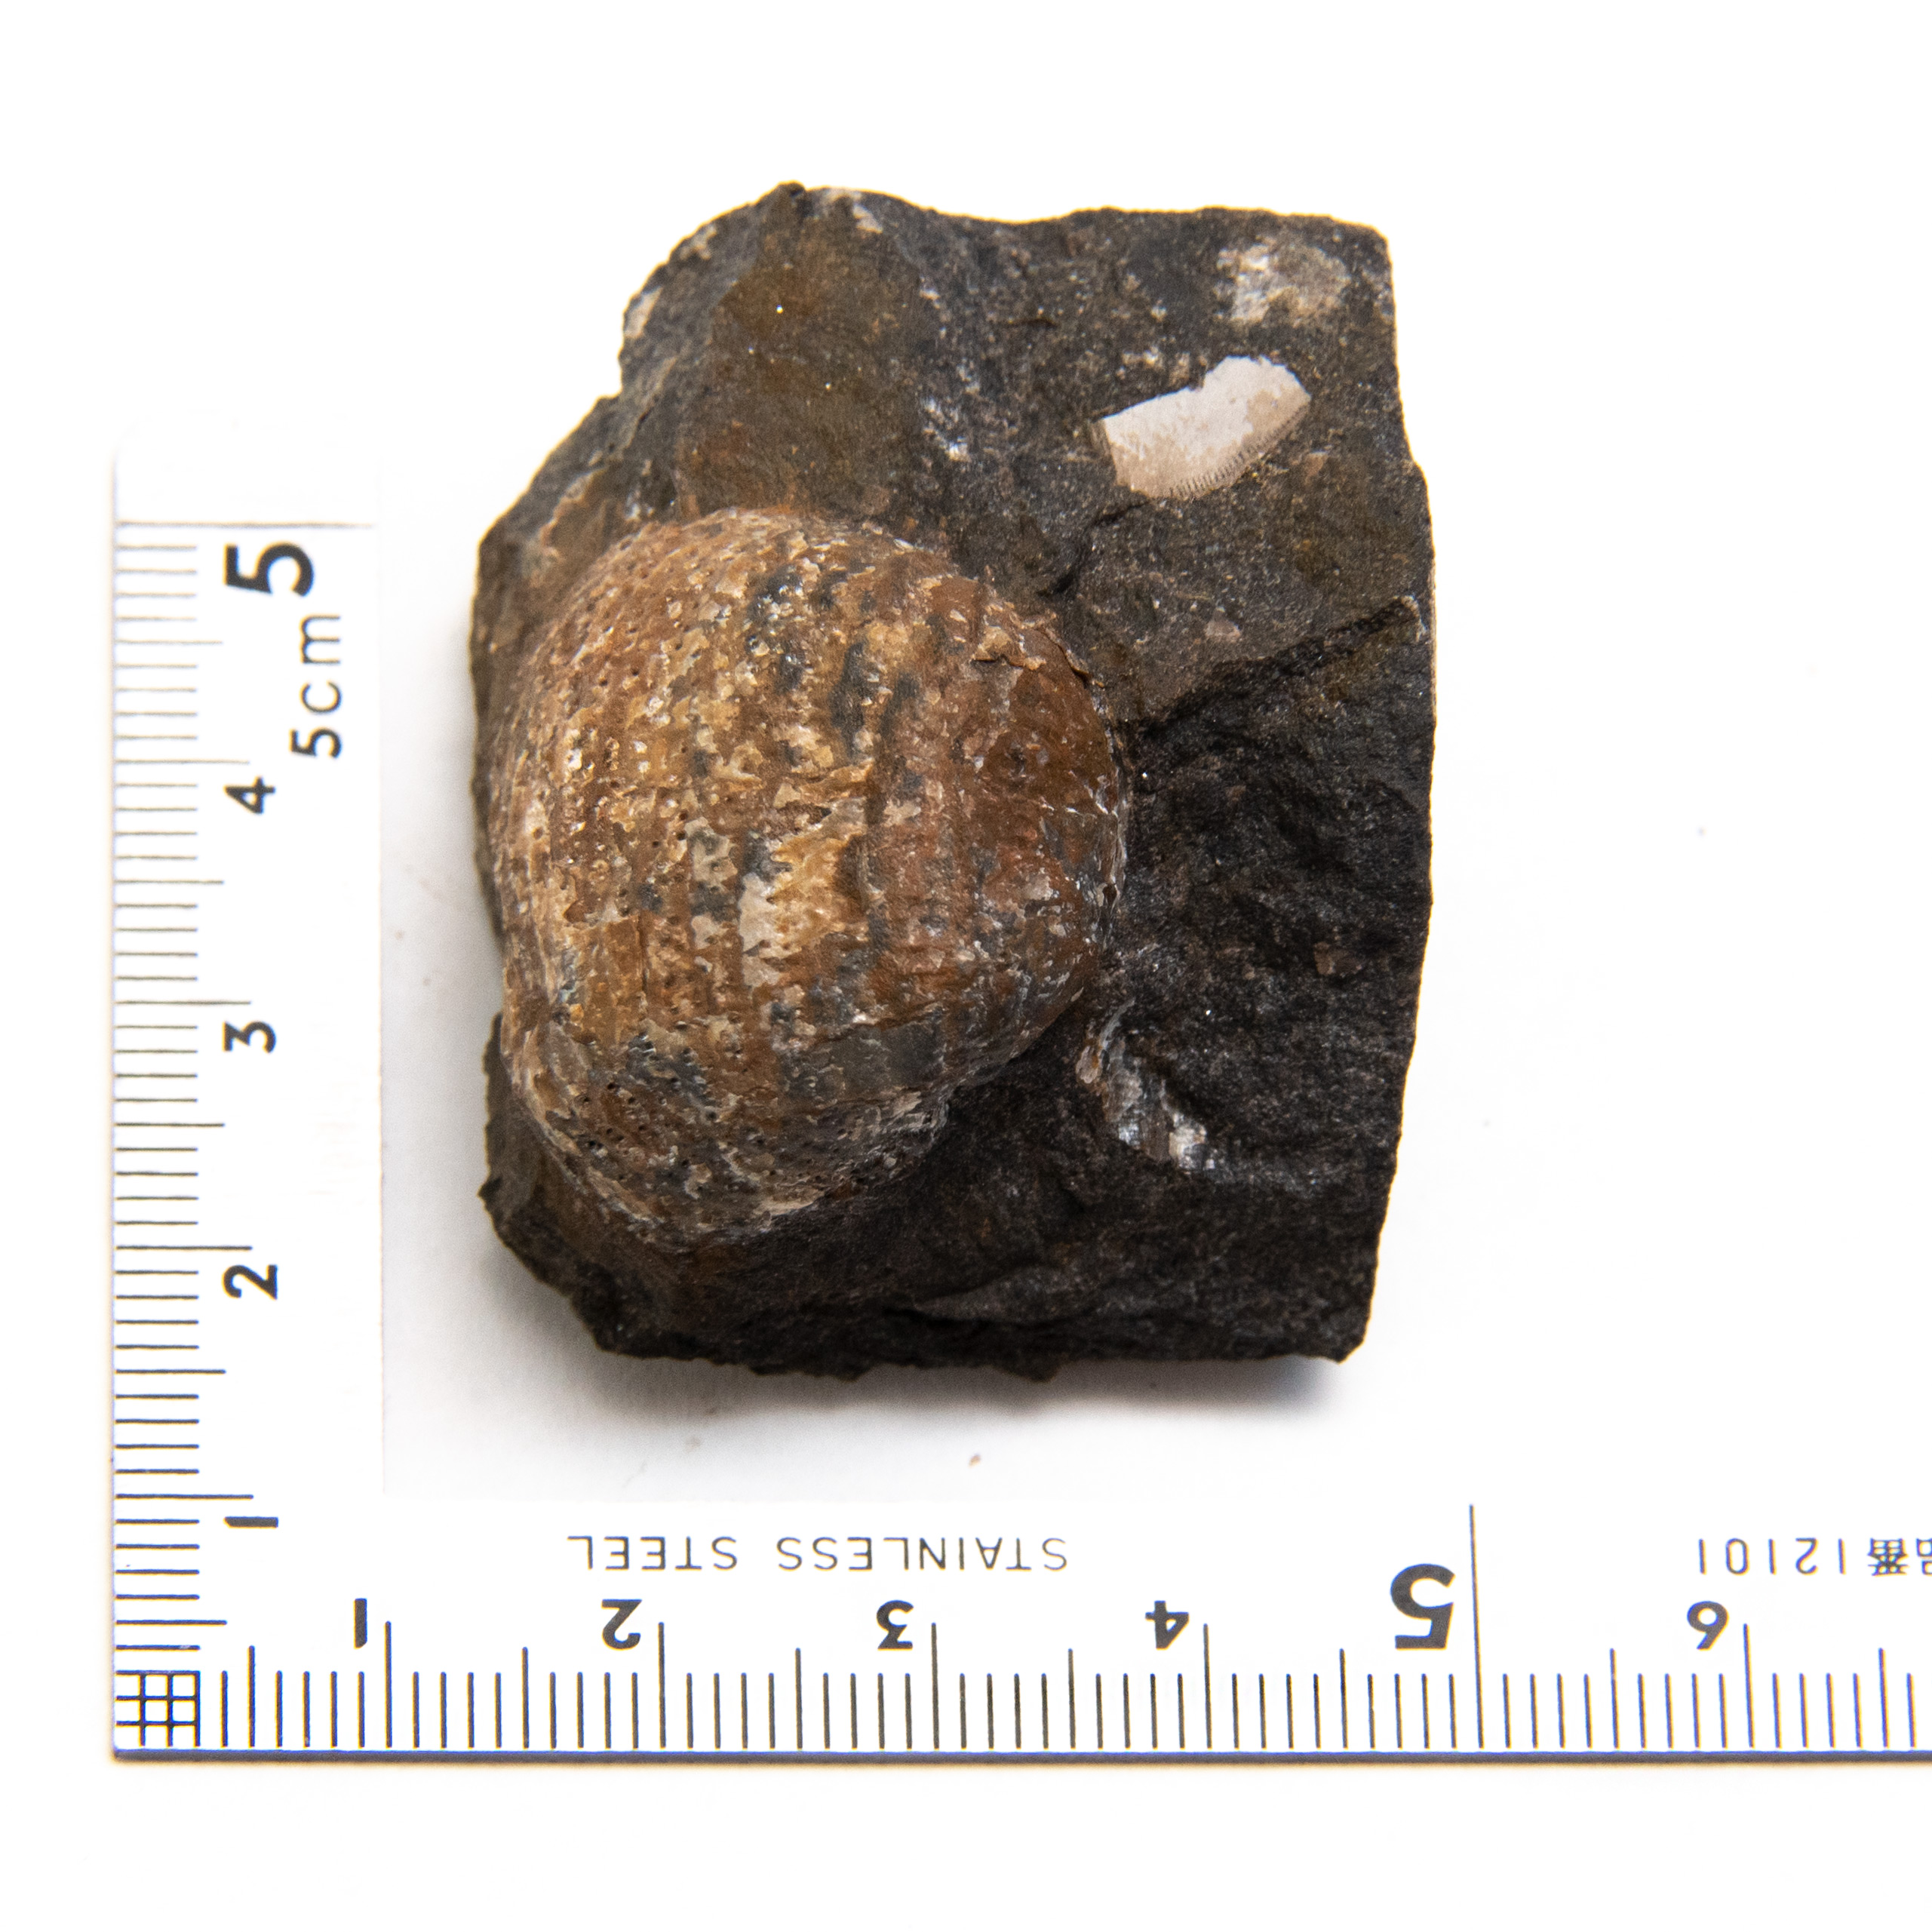 brachiopod-and-petalodus-01-002.jpg